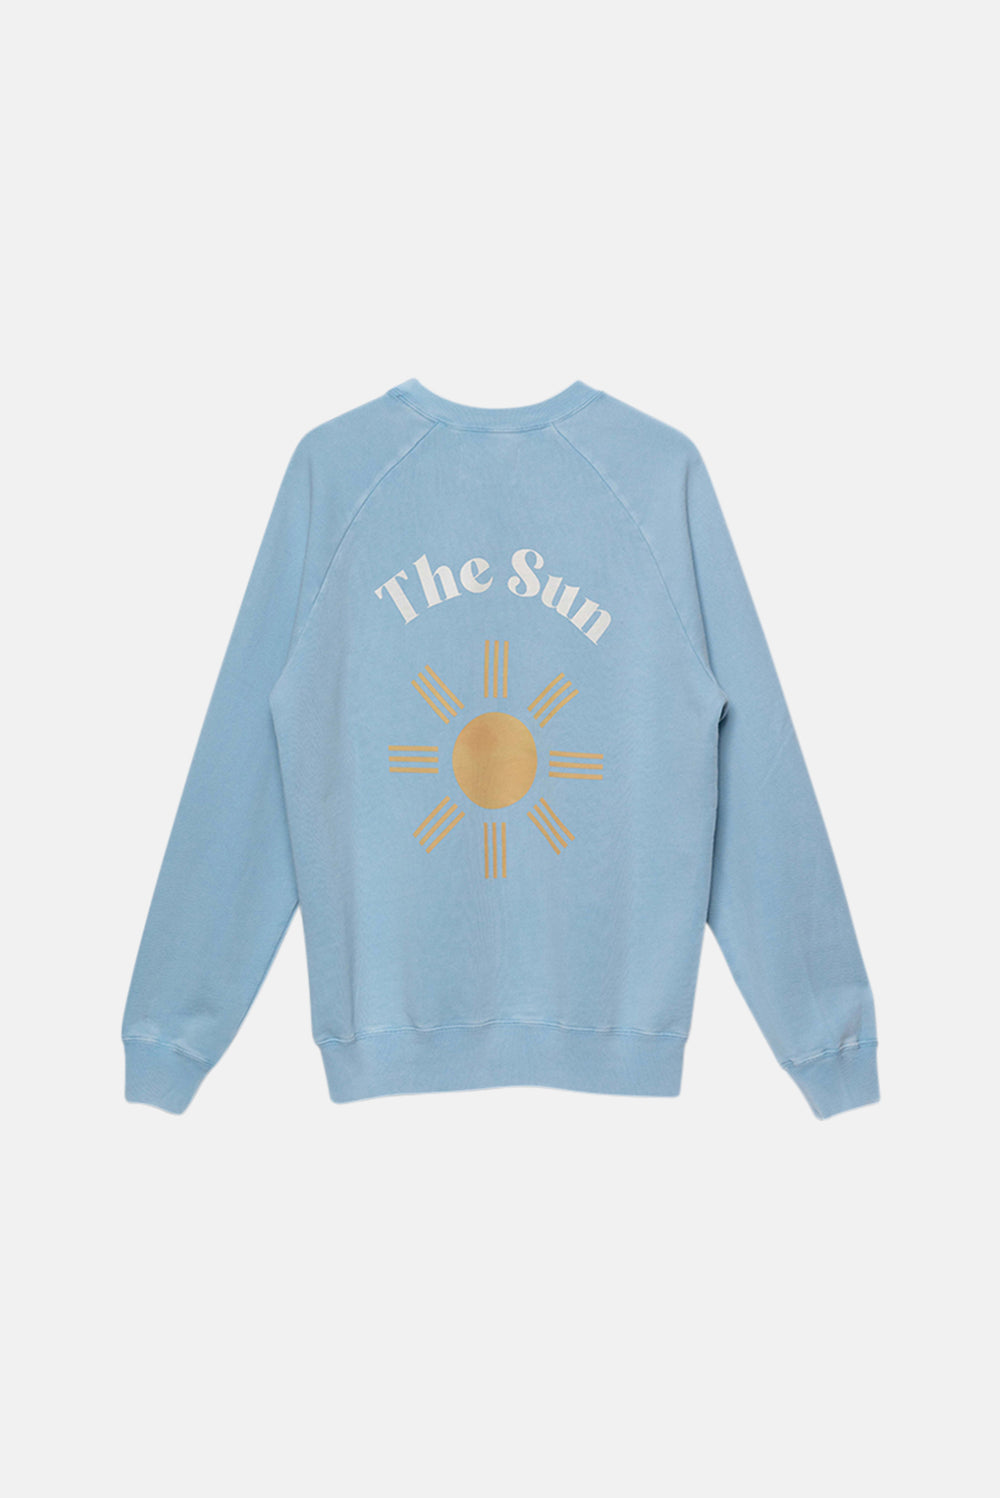 La Paz Cunha The Sun Print Sweatshirt Sky Blue - blueandcream